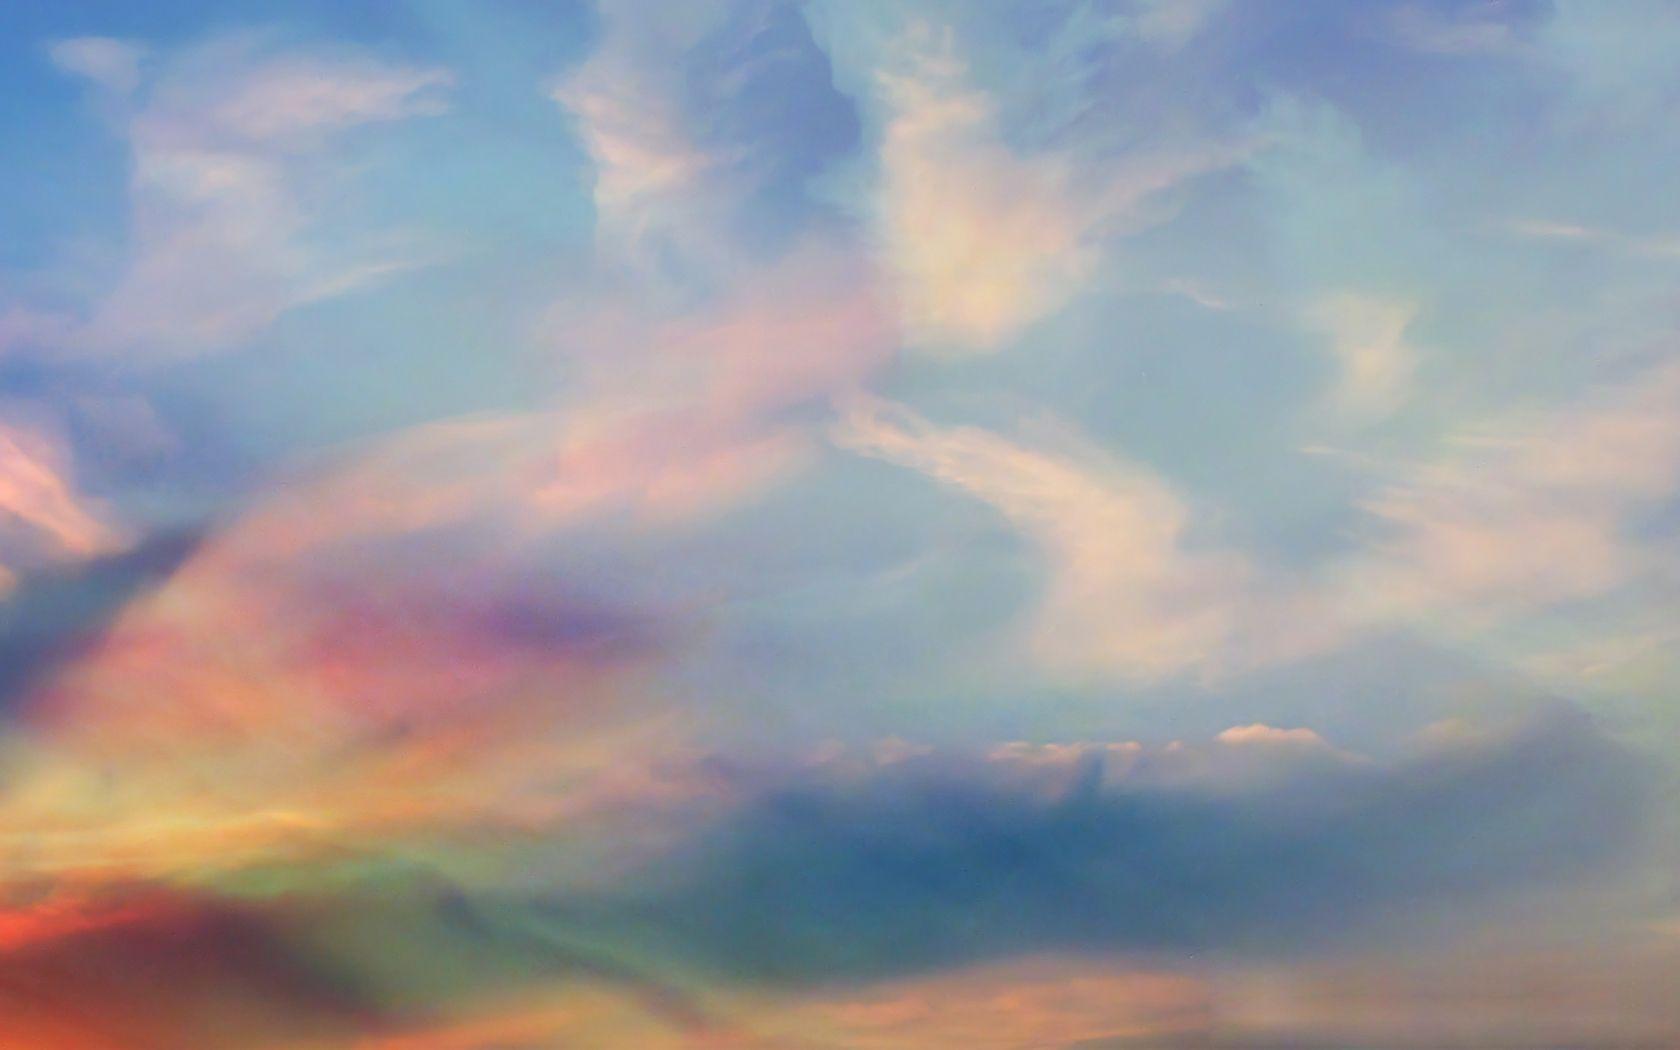 Aesthetic Cloud Wallpapers